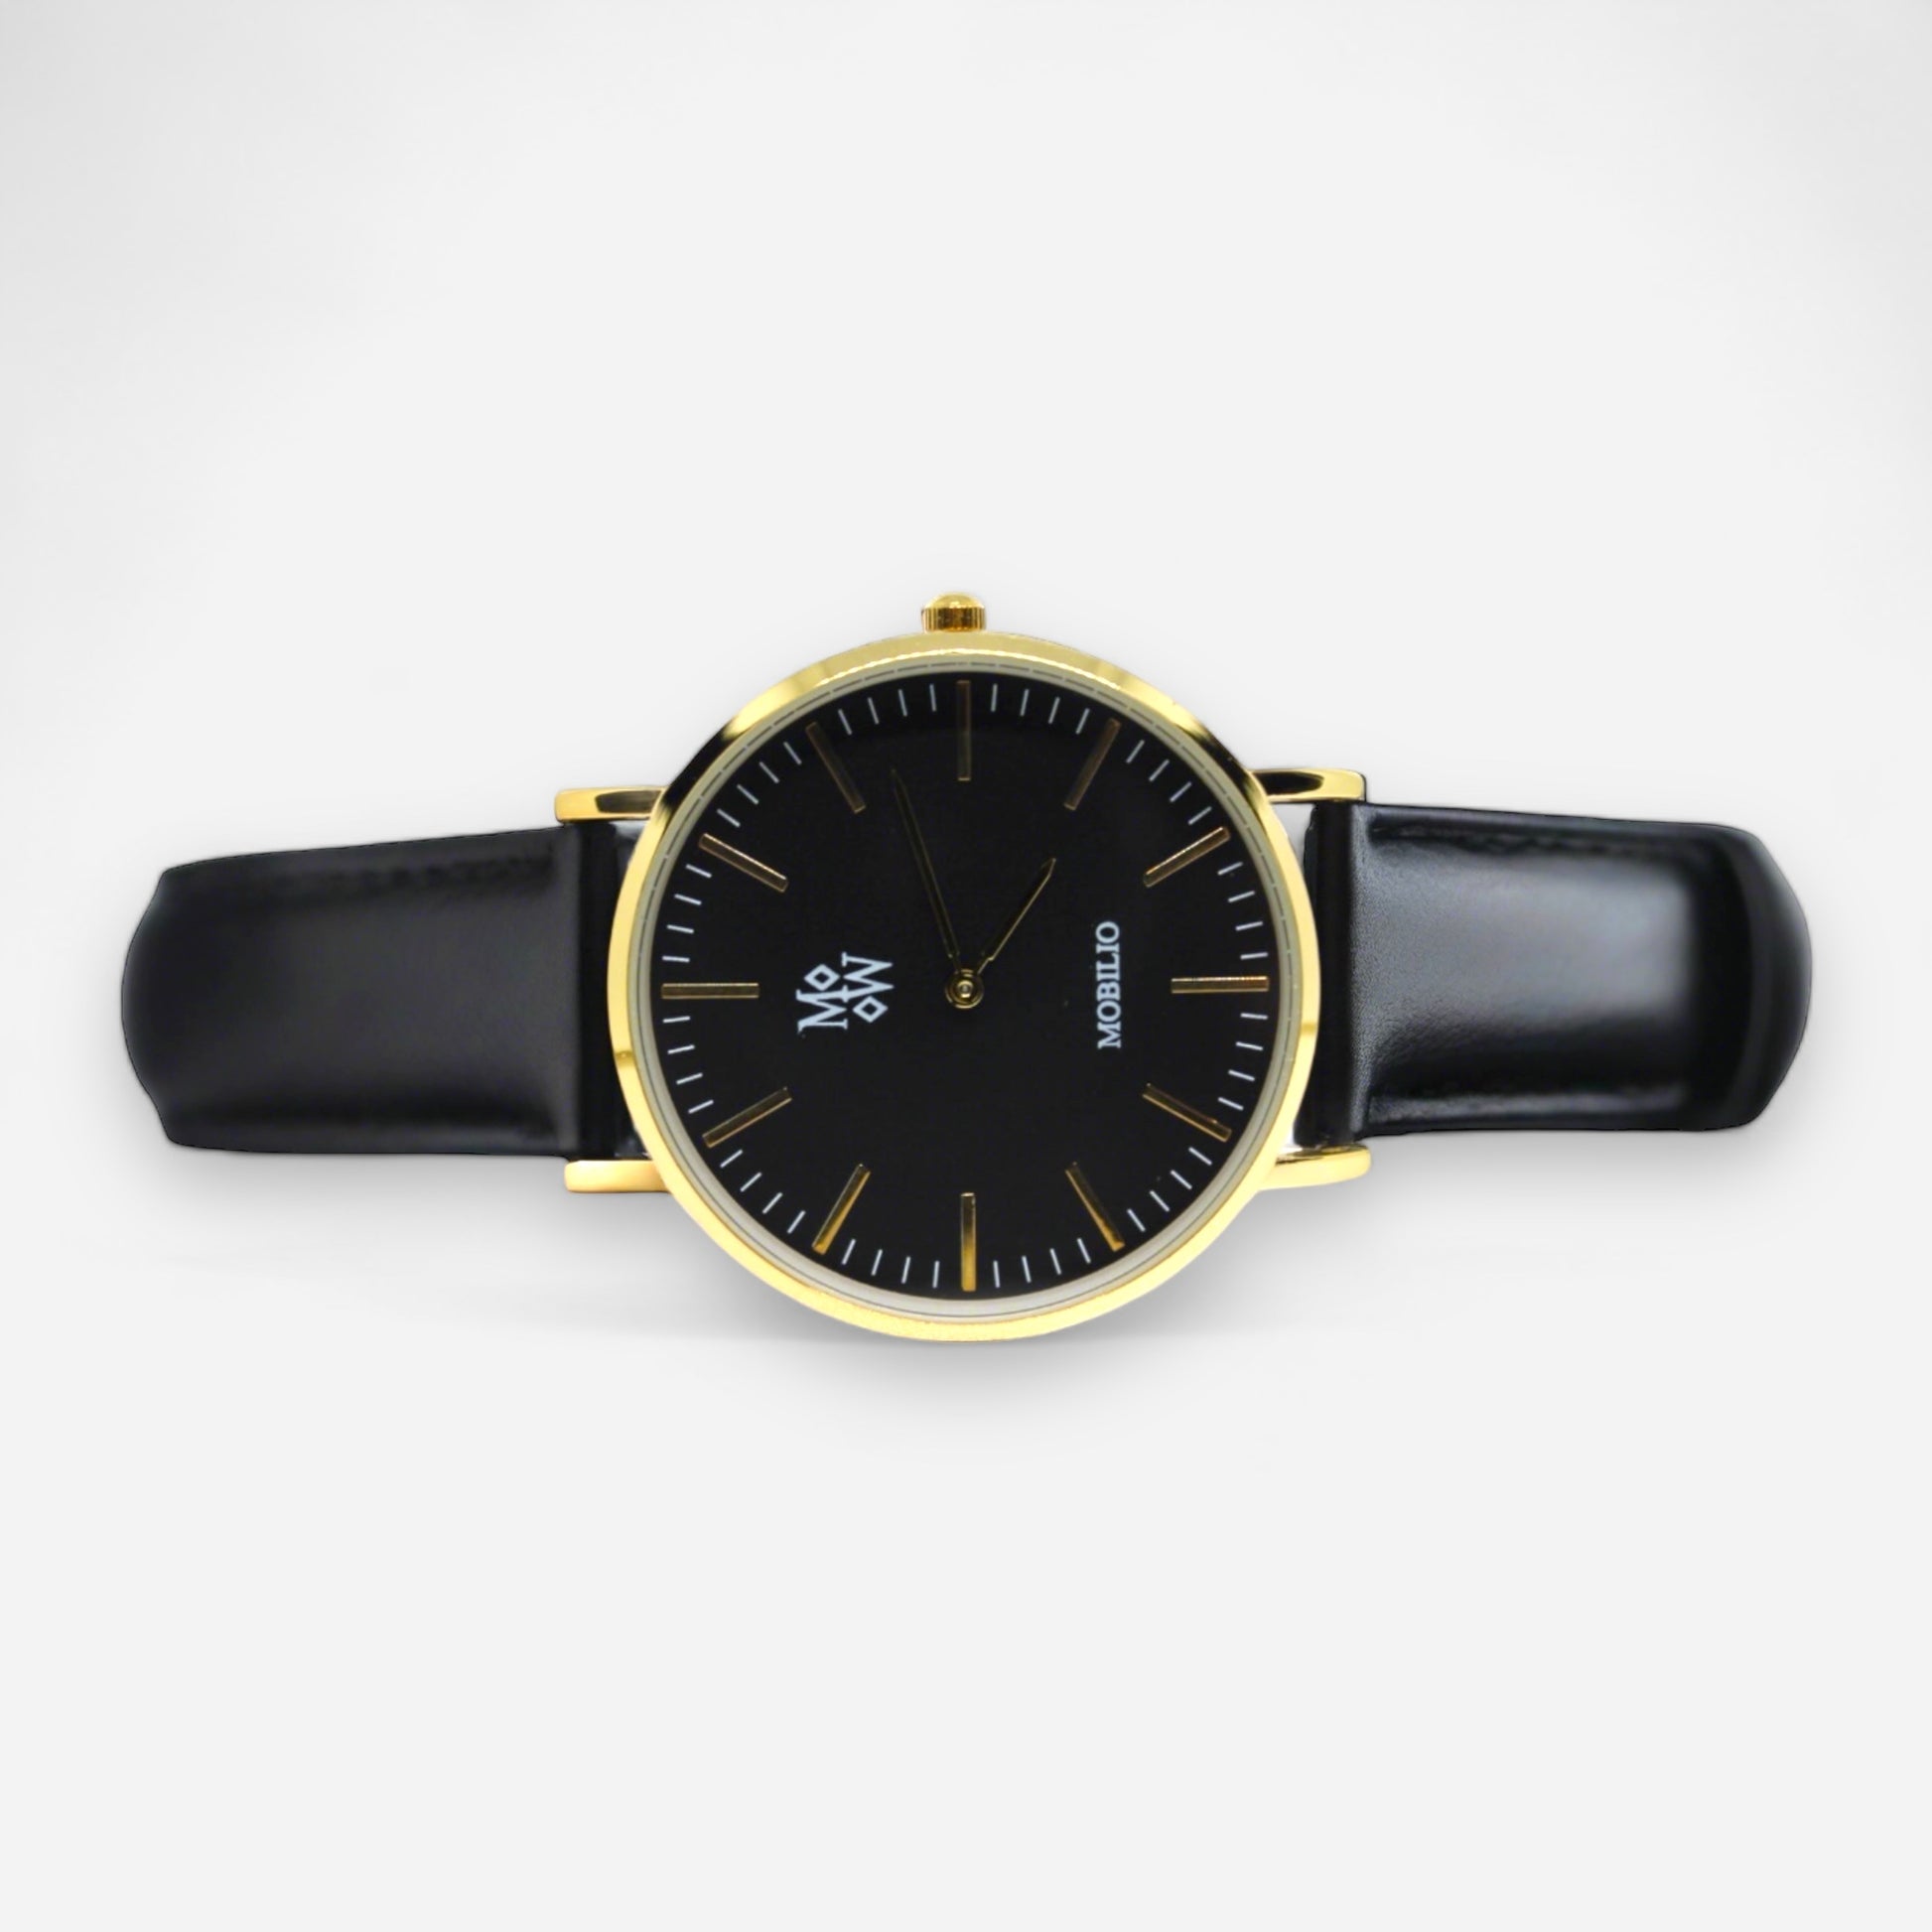 Classico Gold & Black - The Mobilio Watch Company